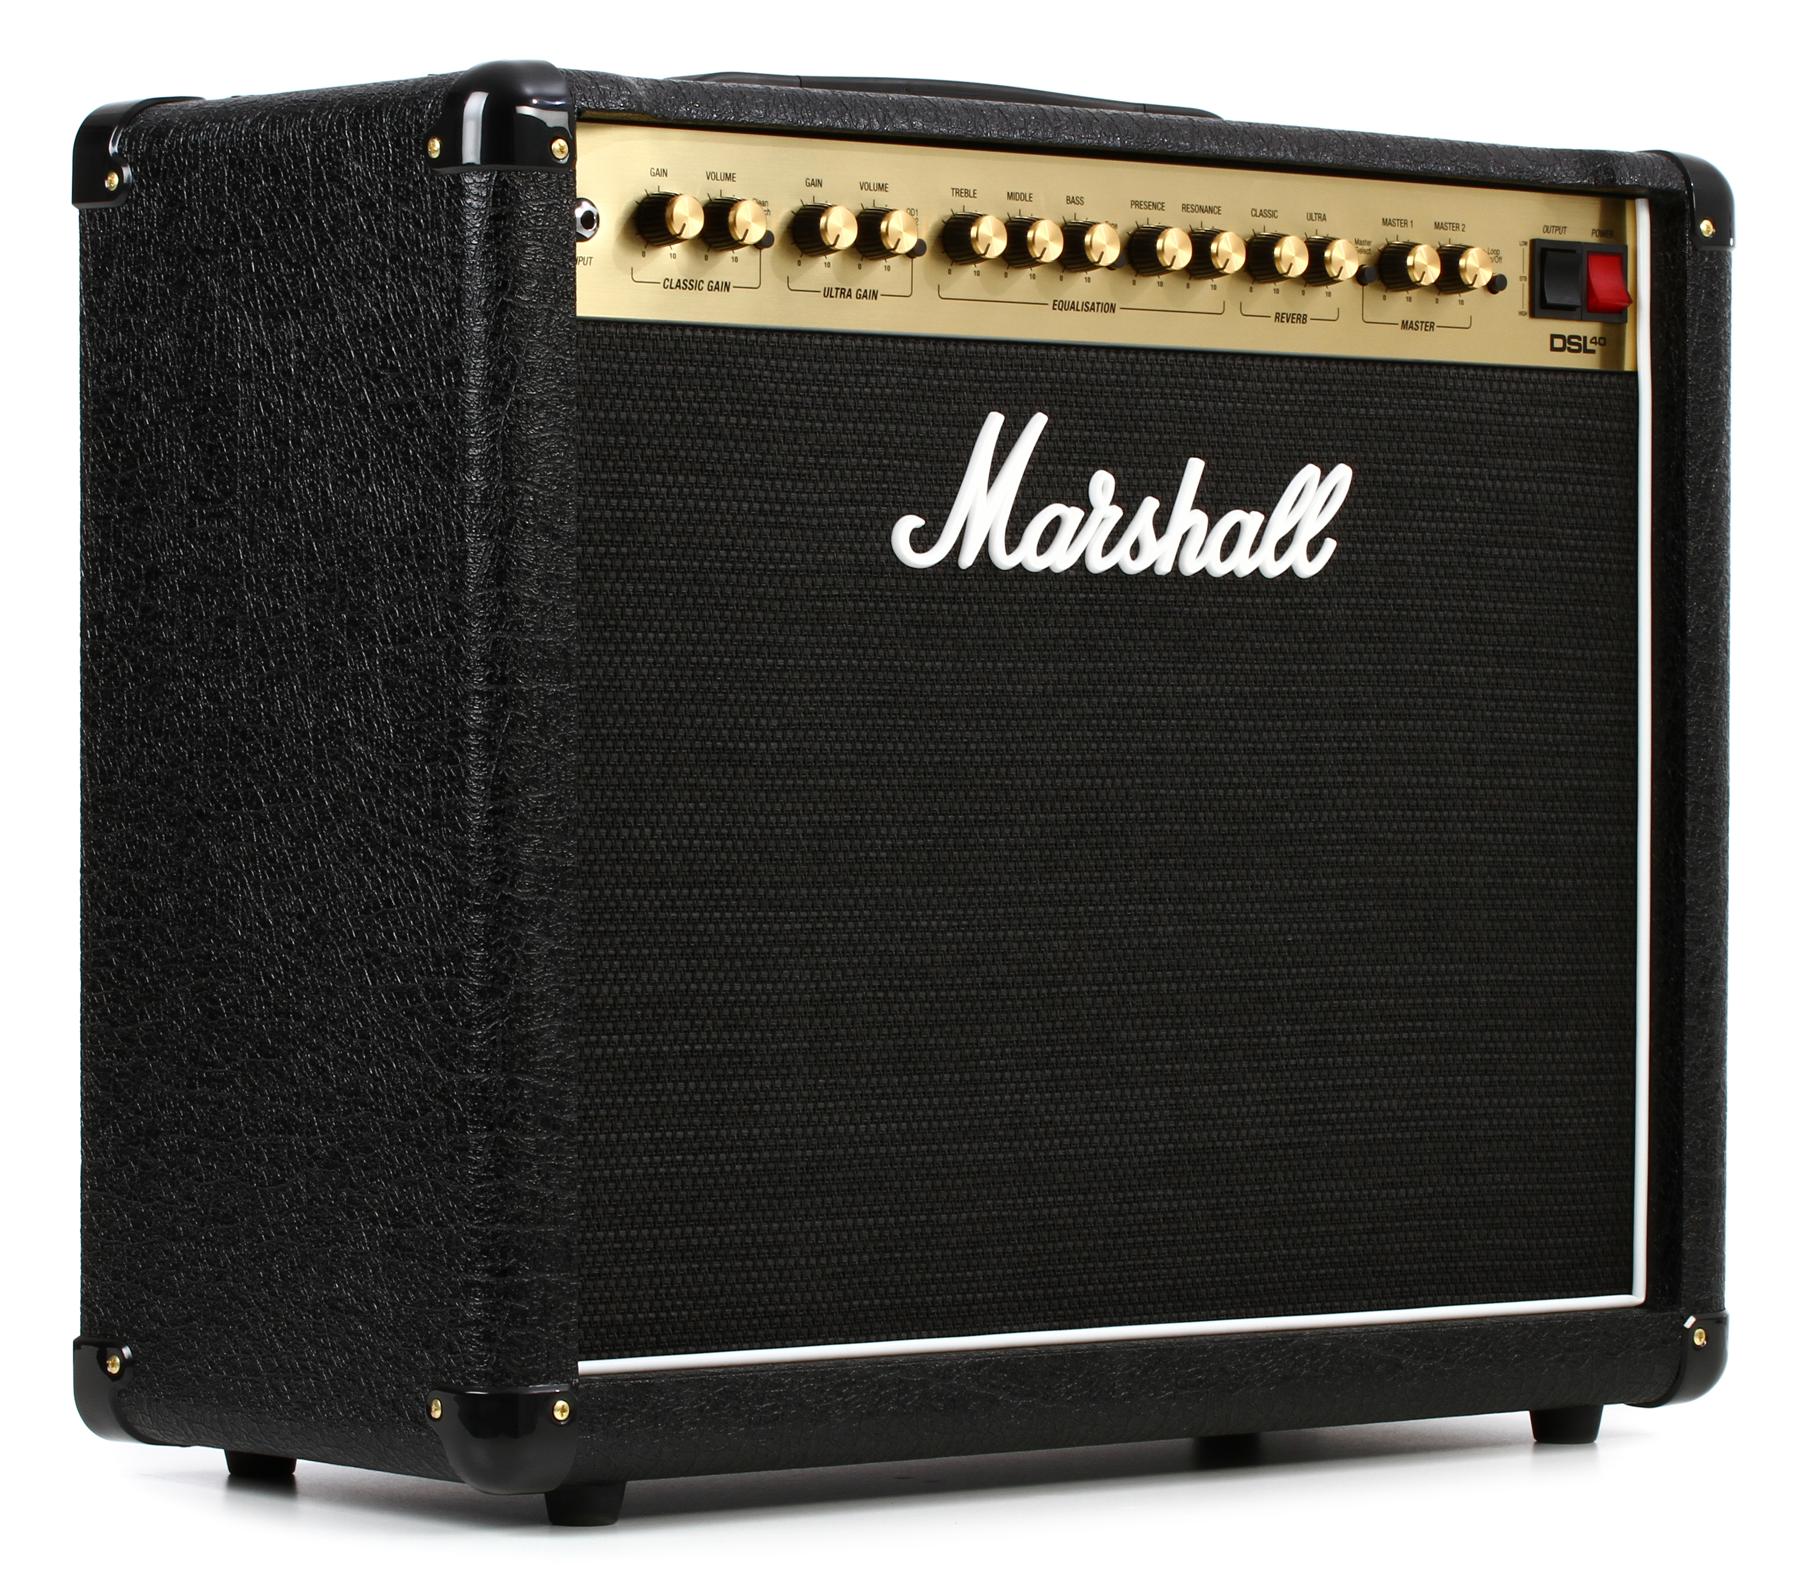 Marshall Guitar Amp